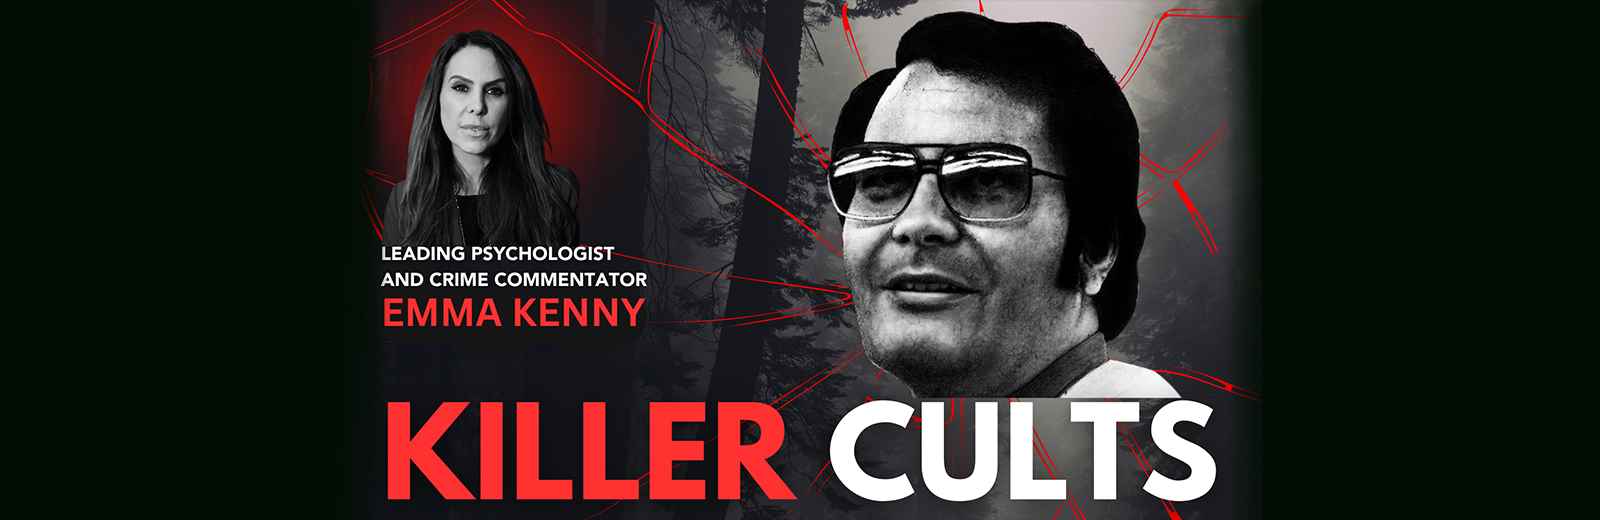 Emma Kenny - Killer Cults